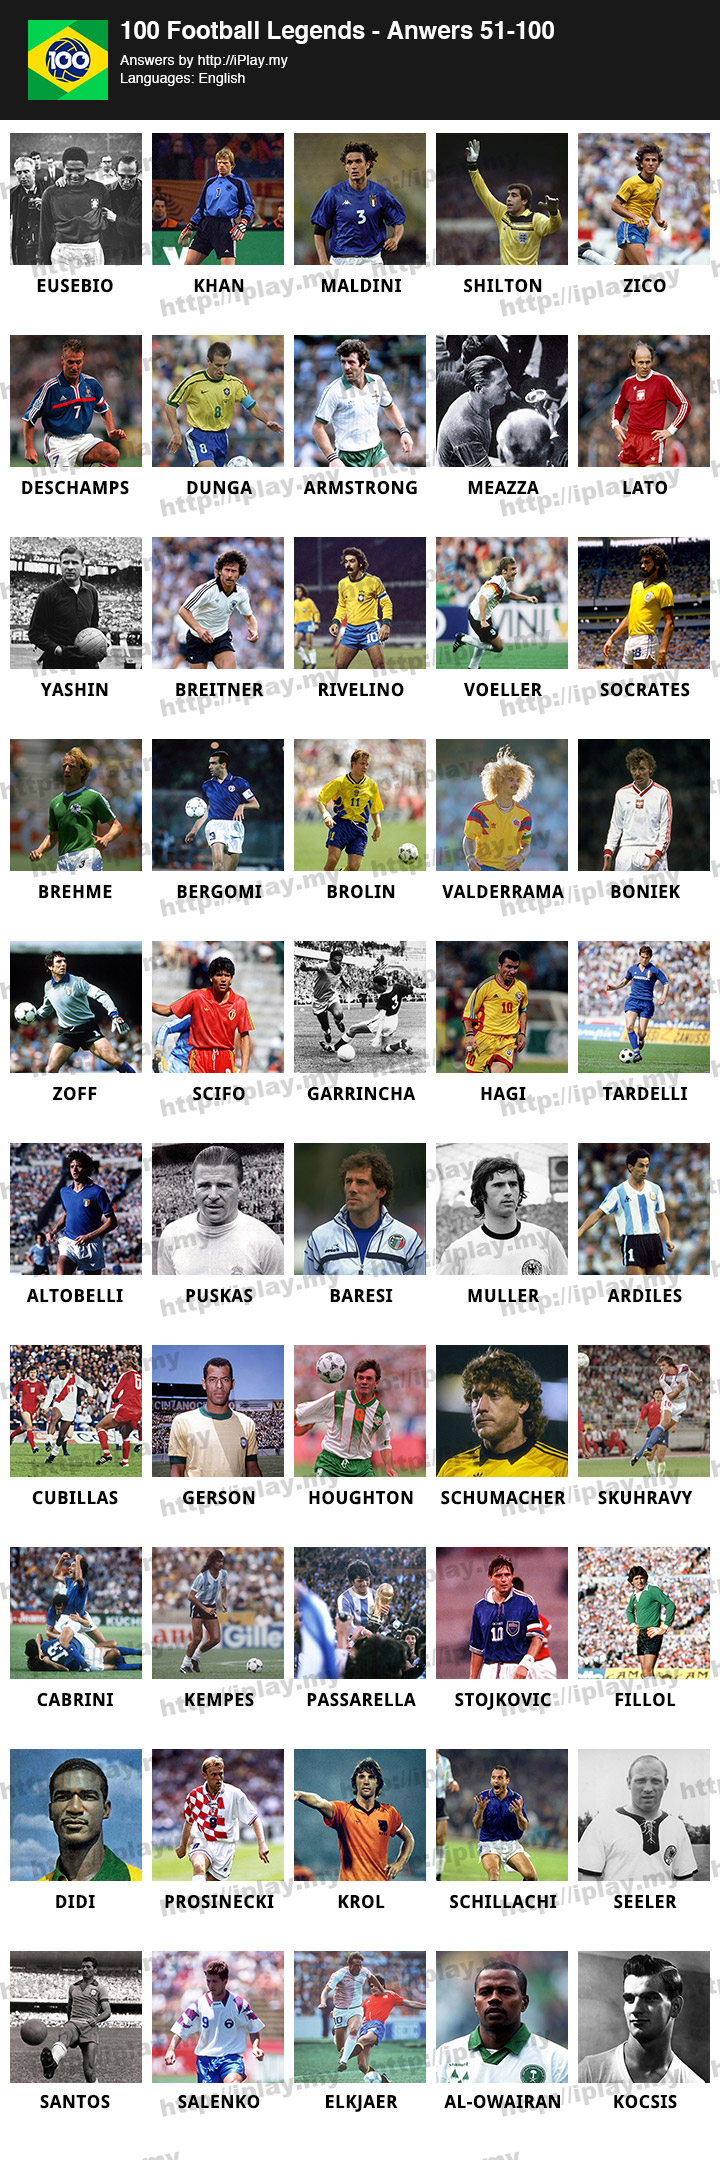 100 Football Legends Answers | iPlay.my